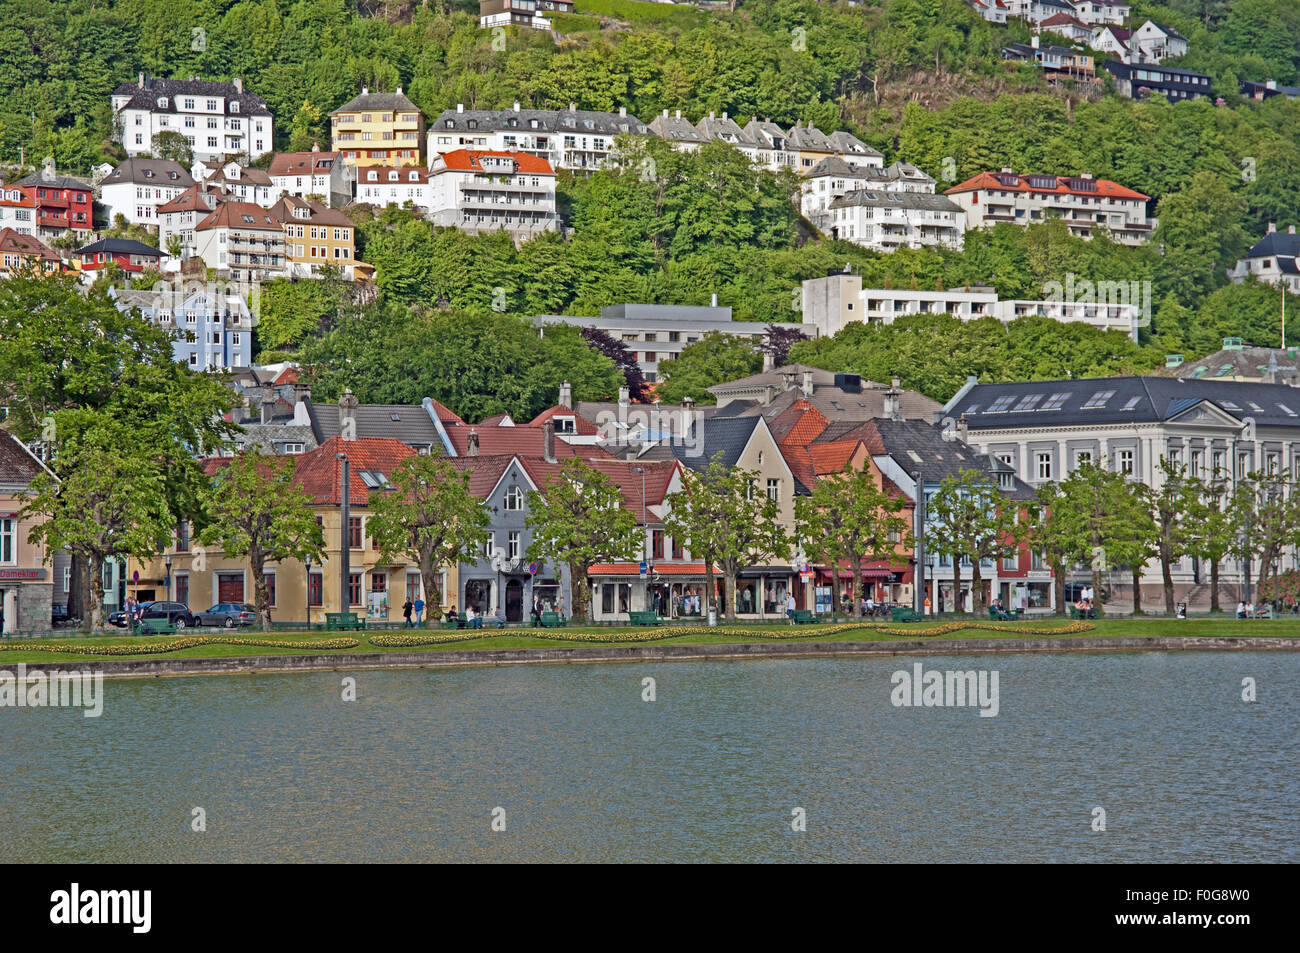 Lille Lungegardsvannet Lake, Homes on Hill Side, Bergen, Hordaland, Vestlandet, Norway, Stock Photo